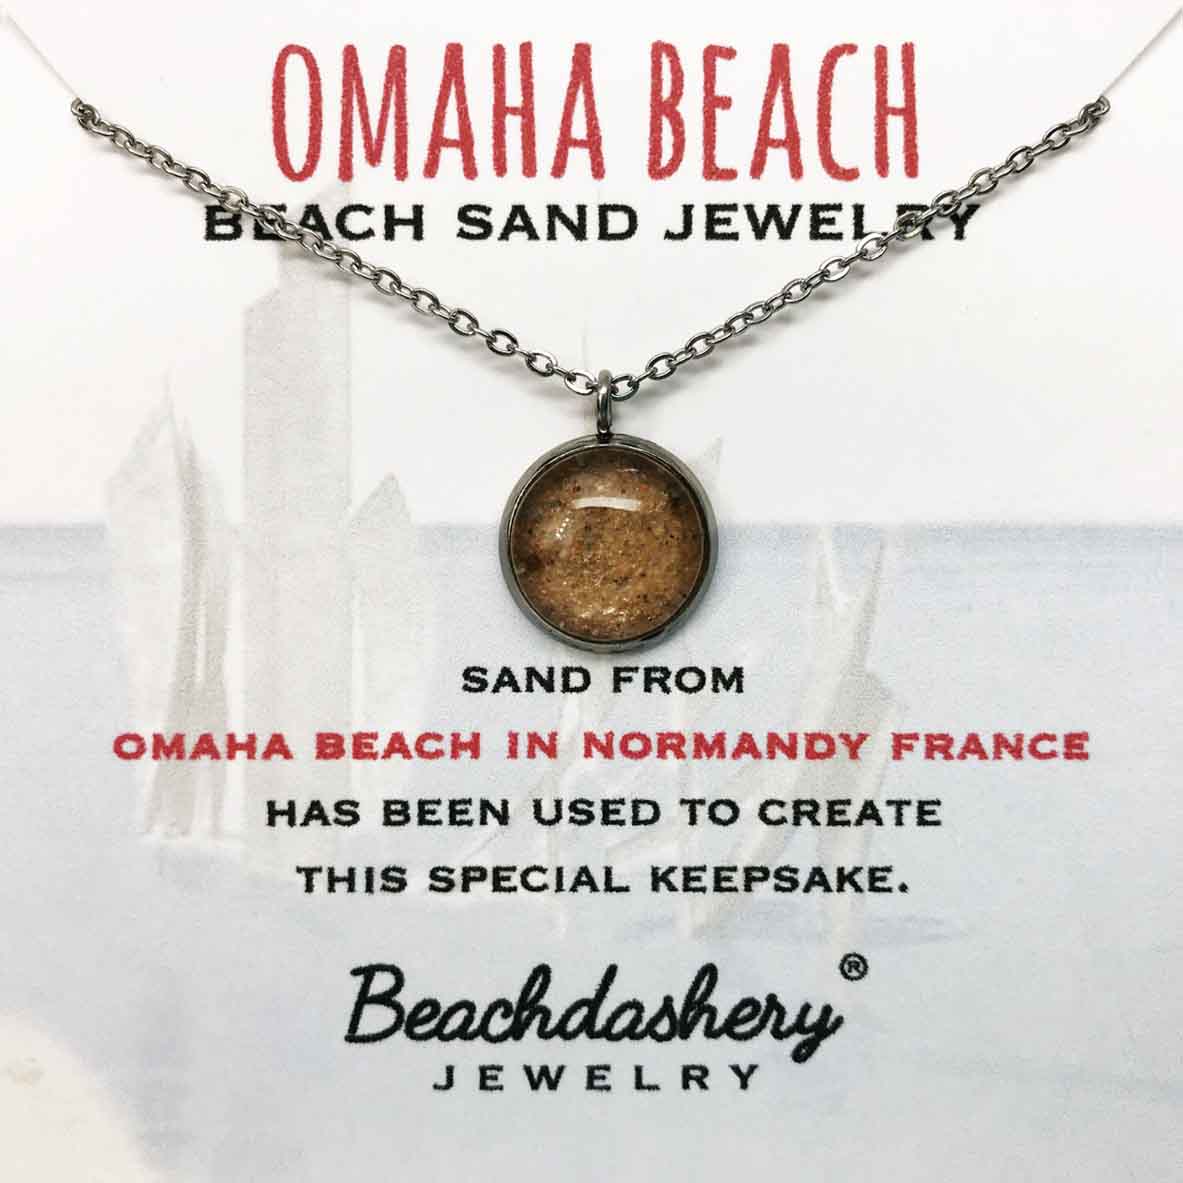 Omaha Beach France Sand Jewelry Beachdashery® Jewelry